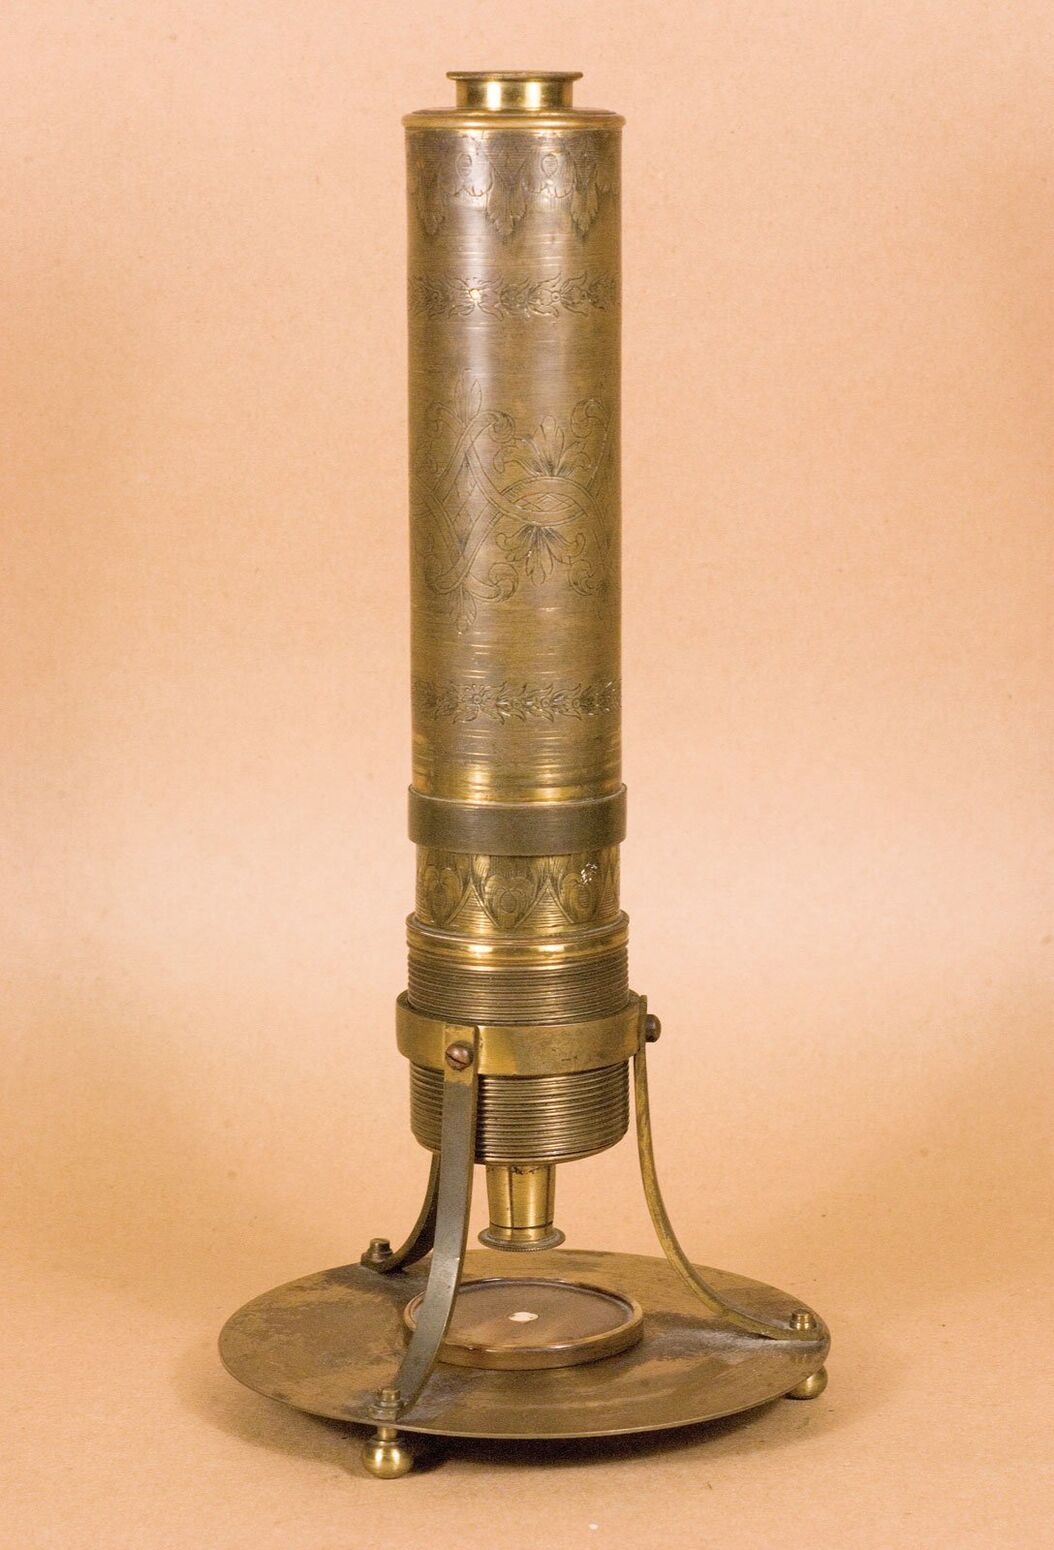  17th-century_compound_microscope.jpg